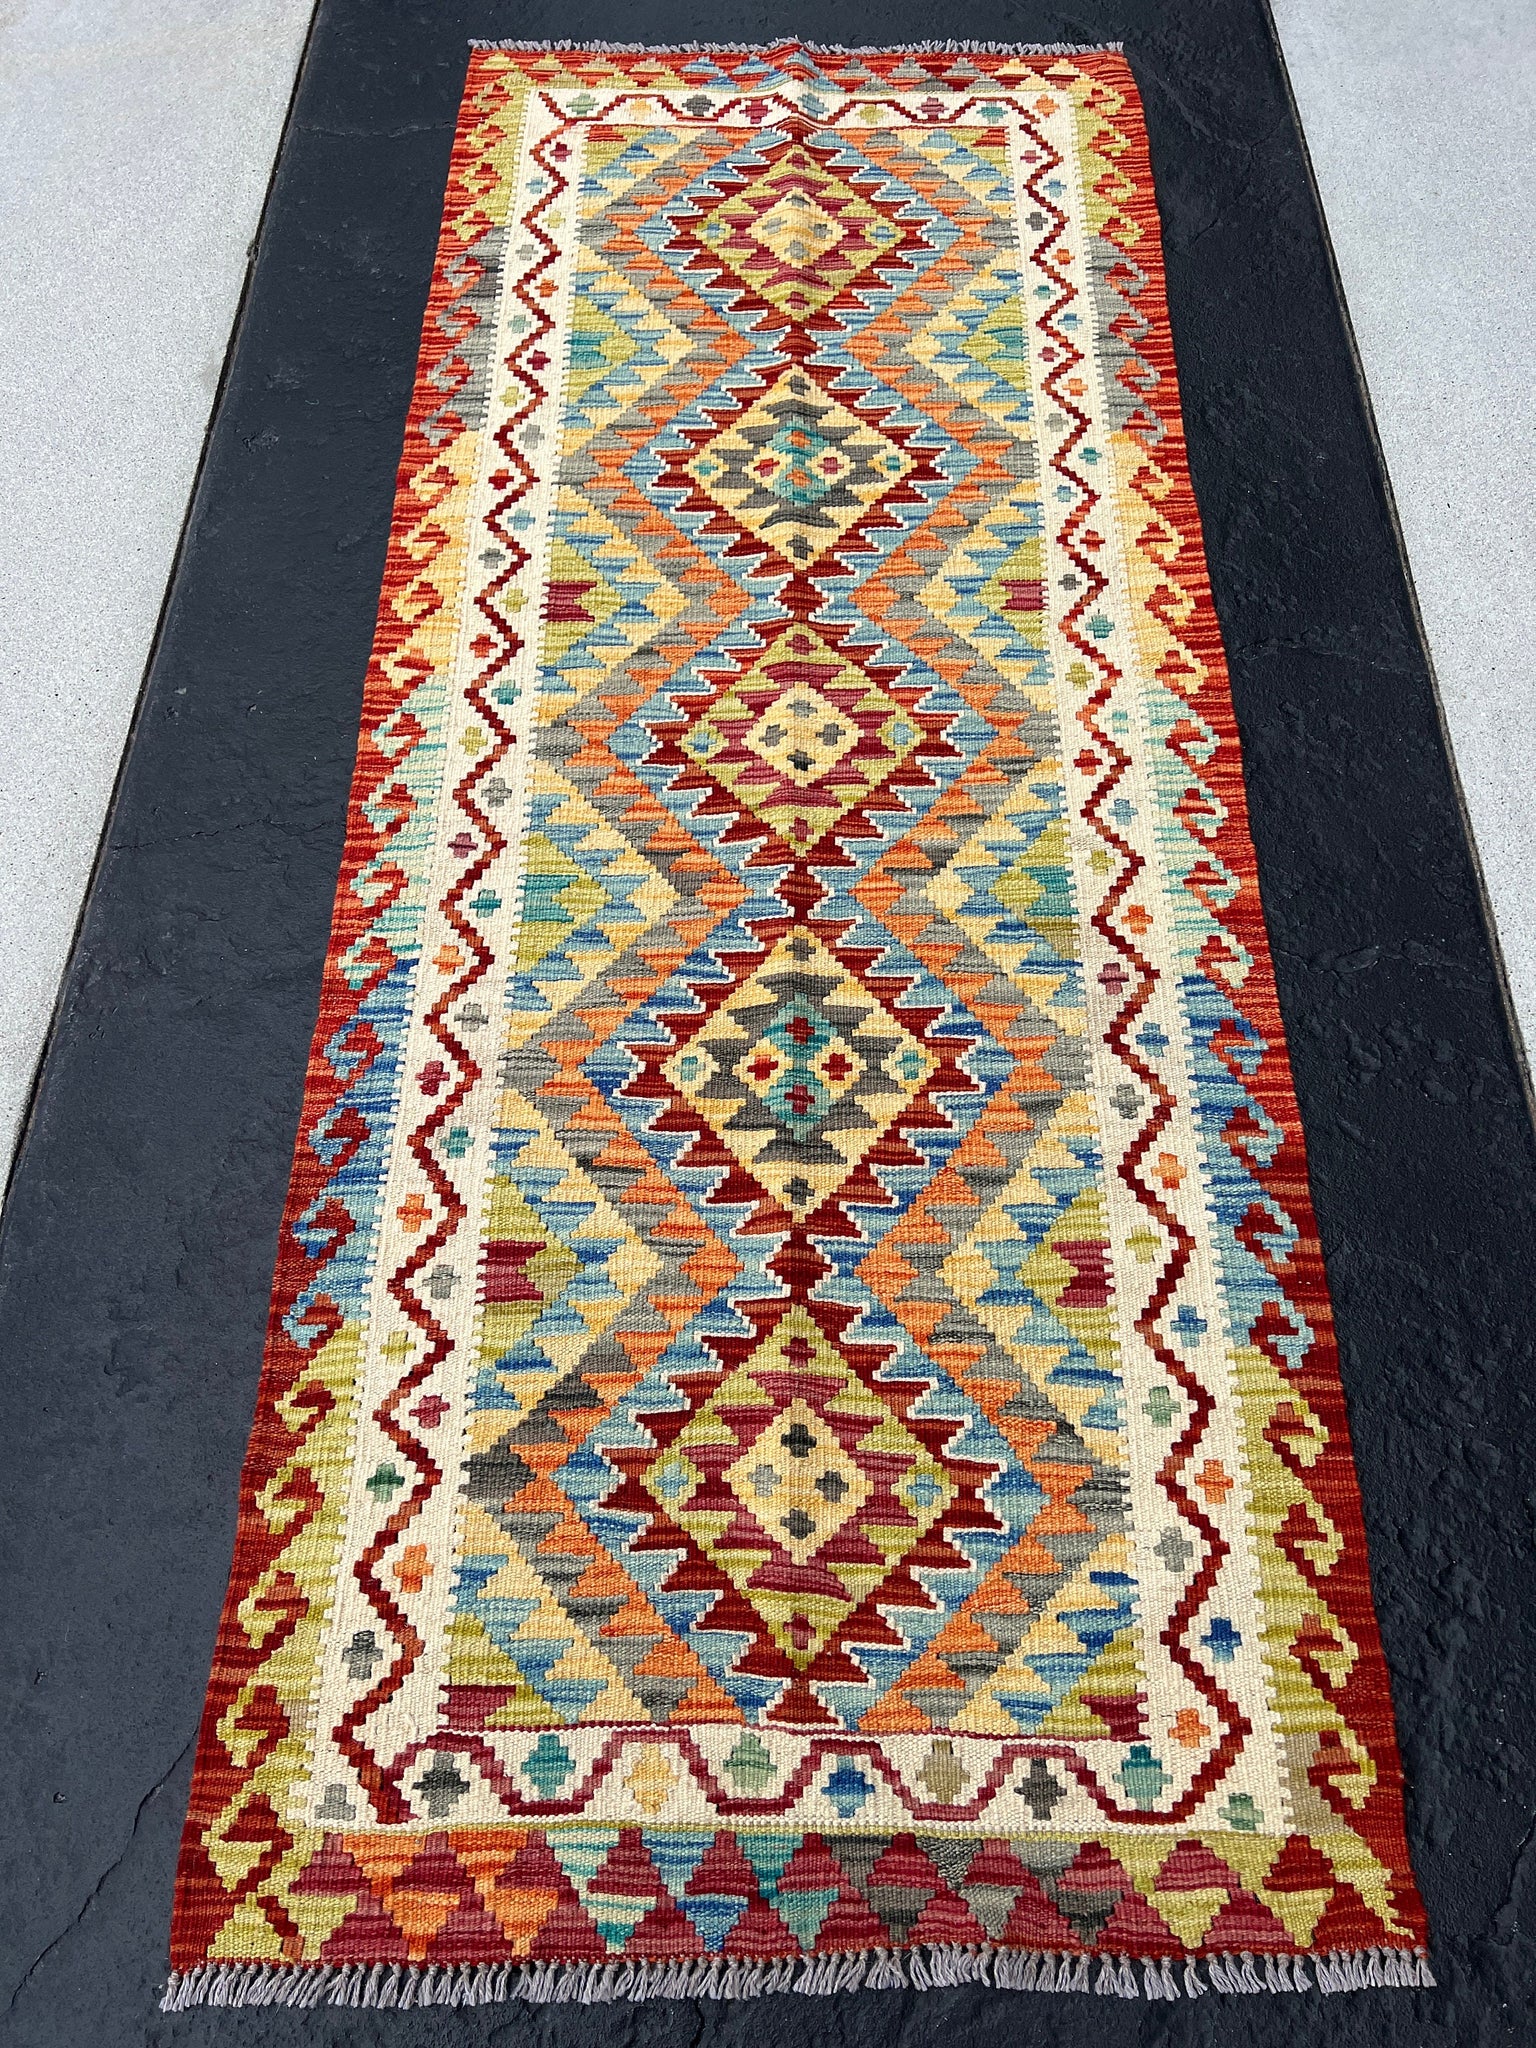 3x7 (100x200) Handmade Afghan Kilim Runner Rug | Cream Blood Red Orange Denim Baby Blue Grey Cornsilk Yellow Moss Olive Green | Wool Turkish